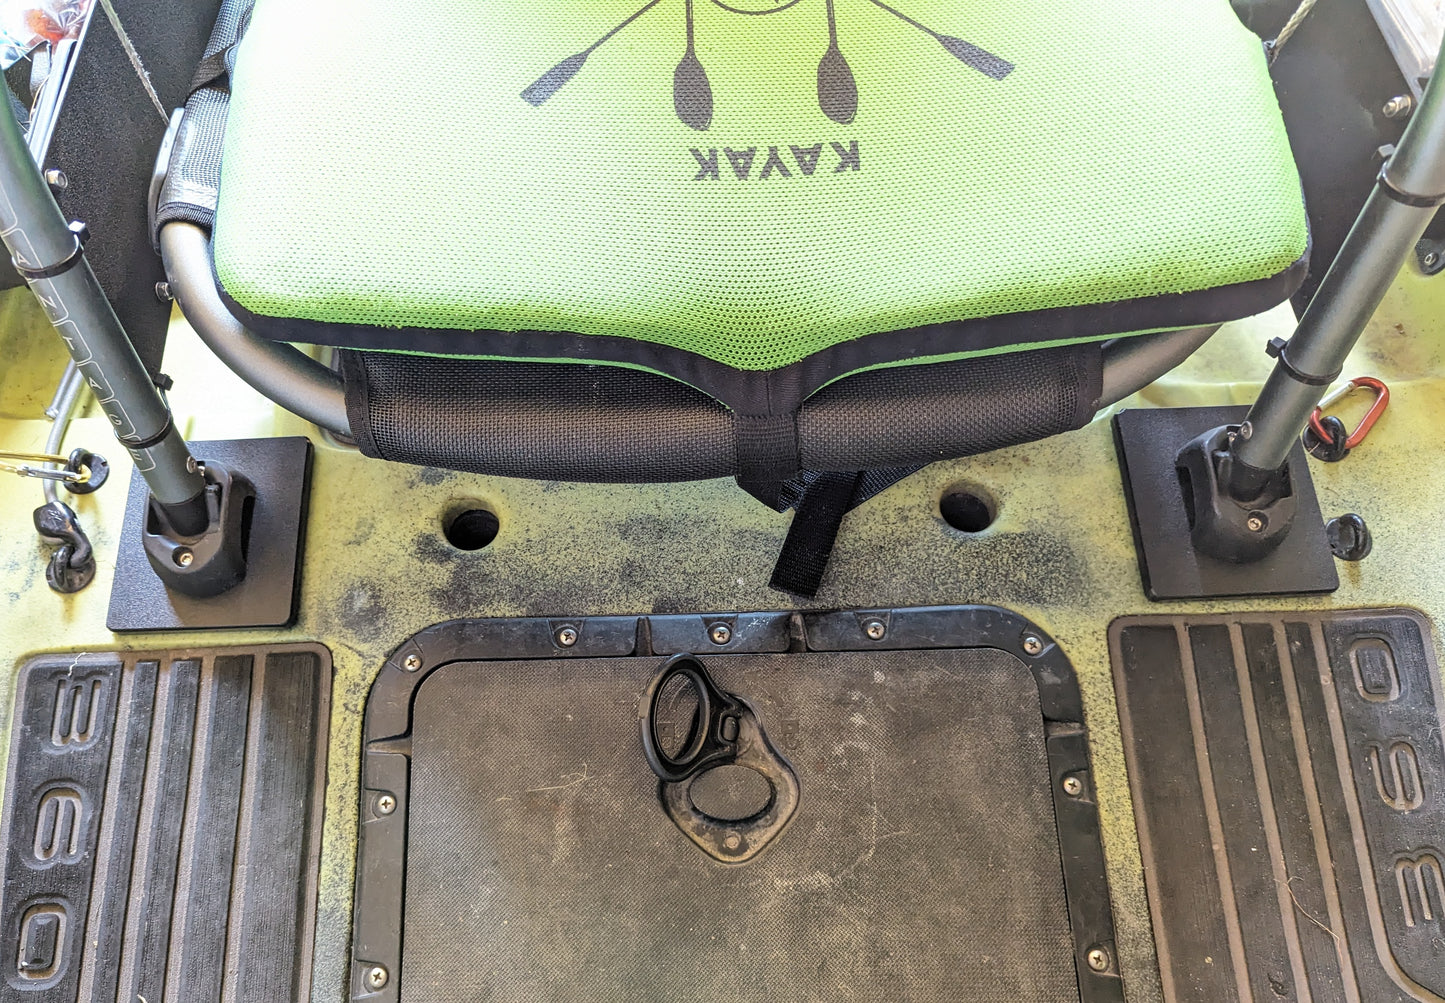 Seat reinforcement blocks for Hobie Pro Anglers.